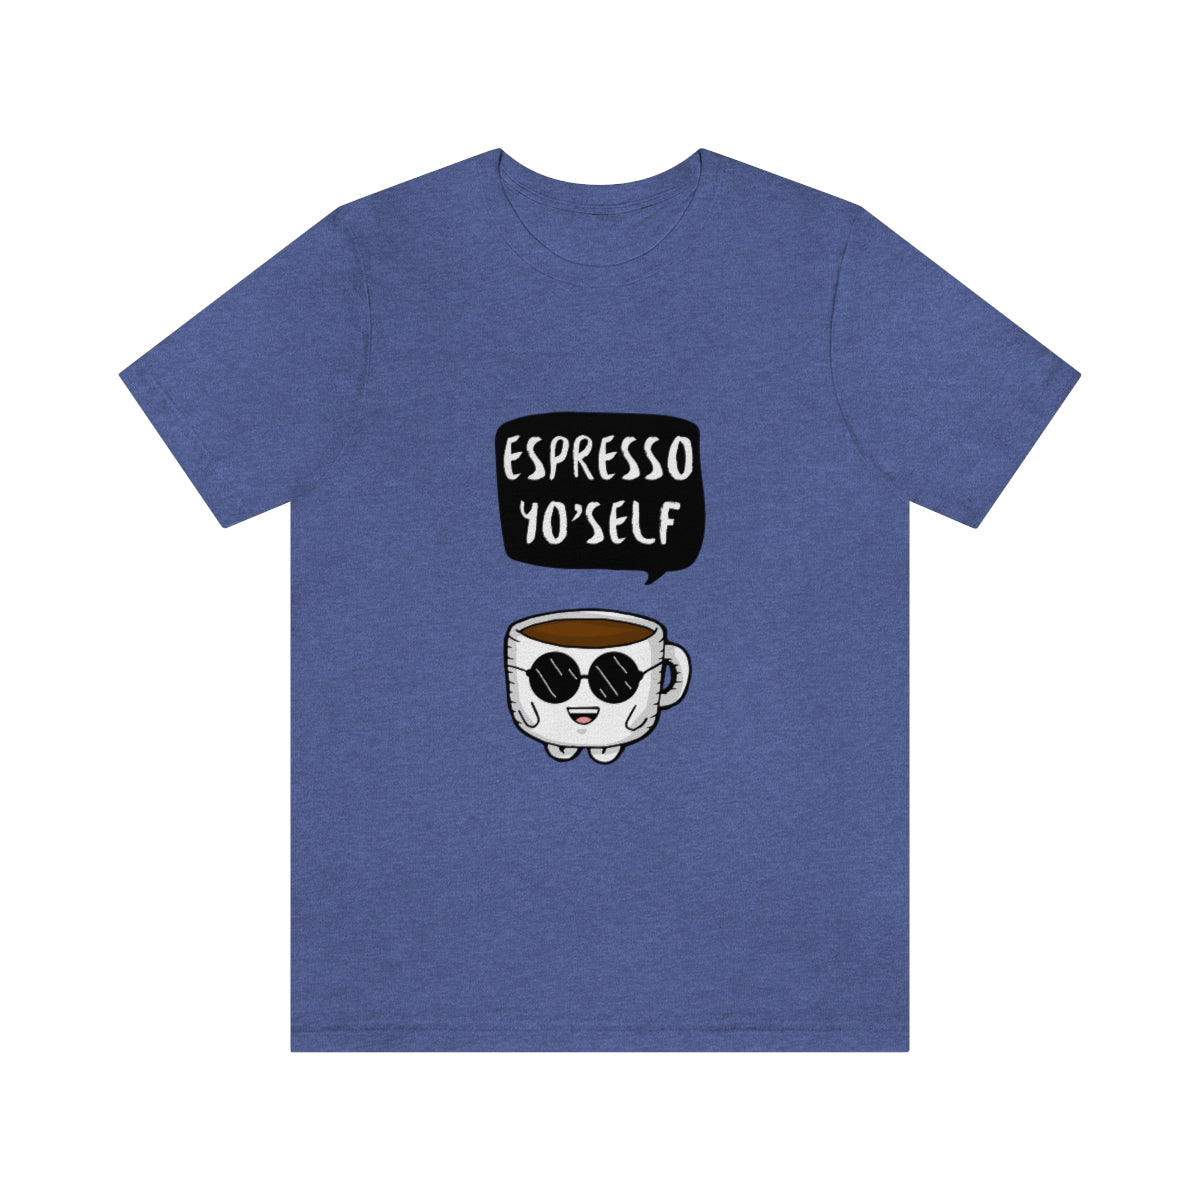 Espresso Yo'Self 2 - Unisex T-Shirt